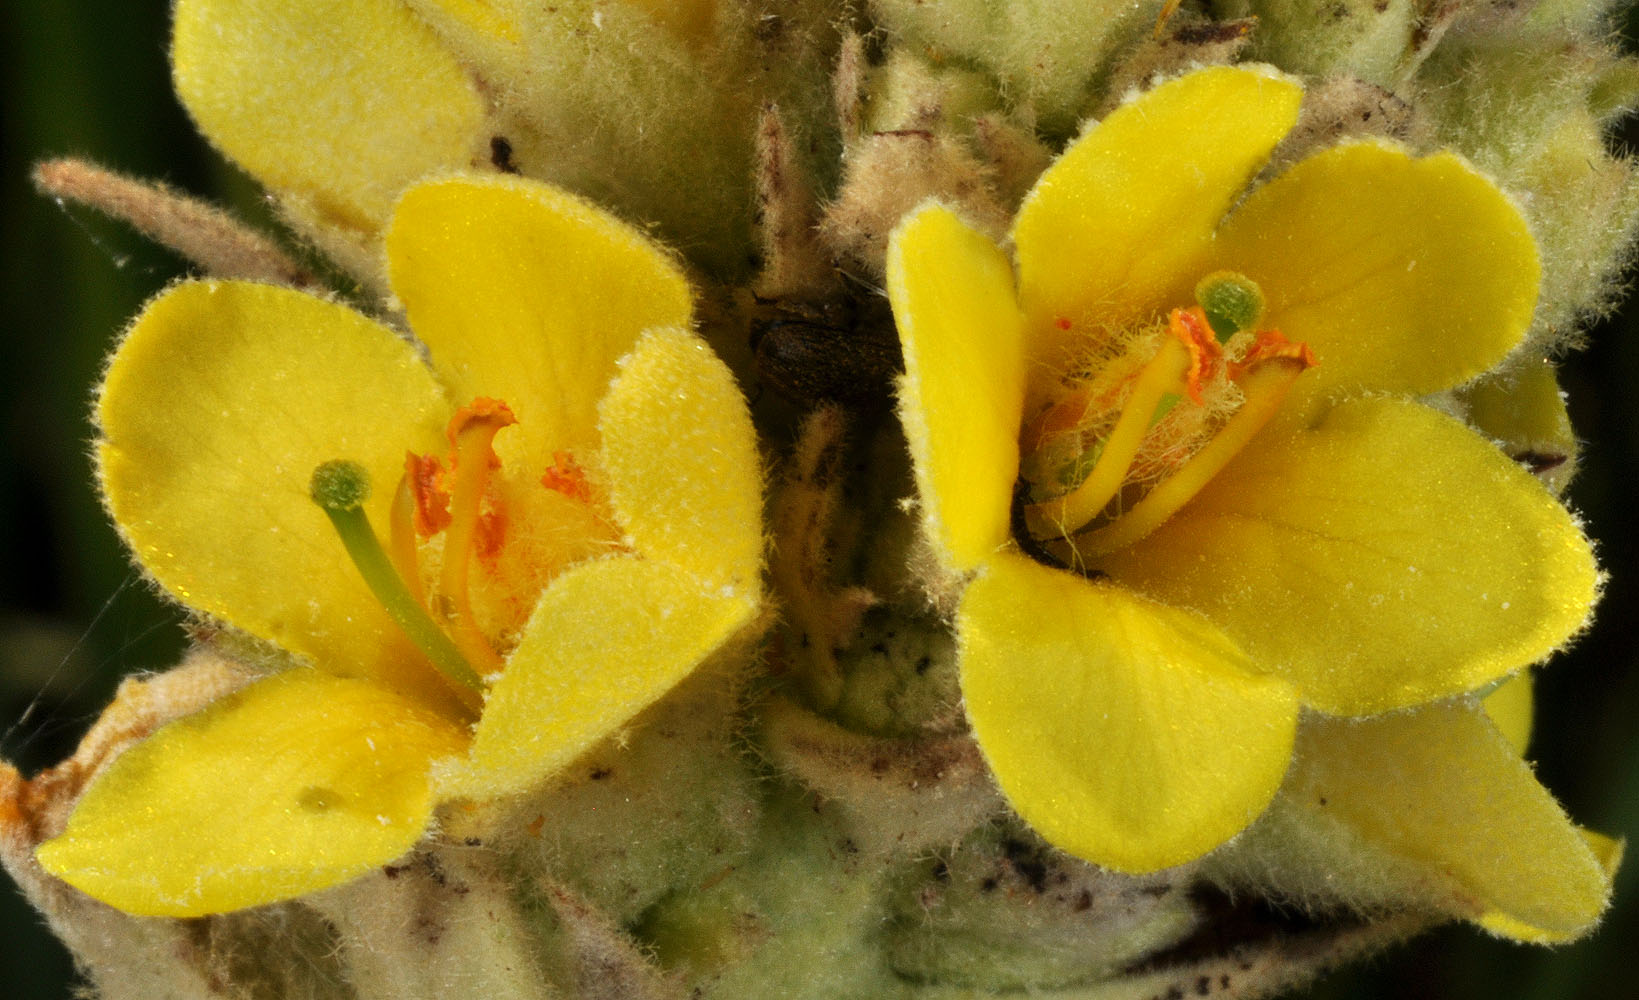 Flora of Eastern Washington Image: Verbascum thapsus